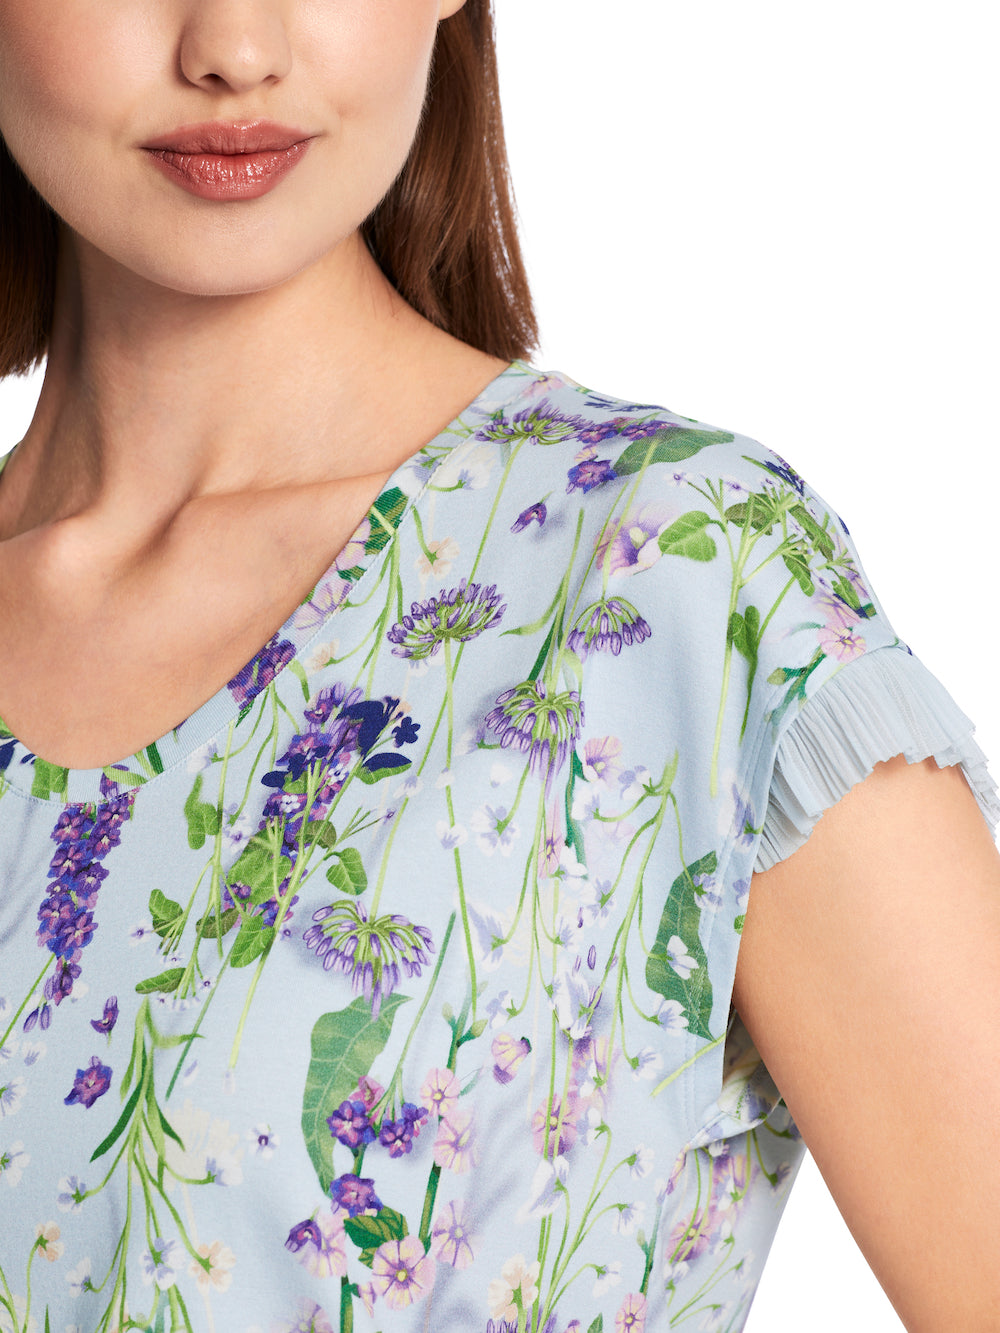 Soft Summer Sky Fioretti Floral Print T-Shirt